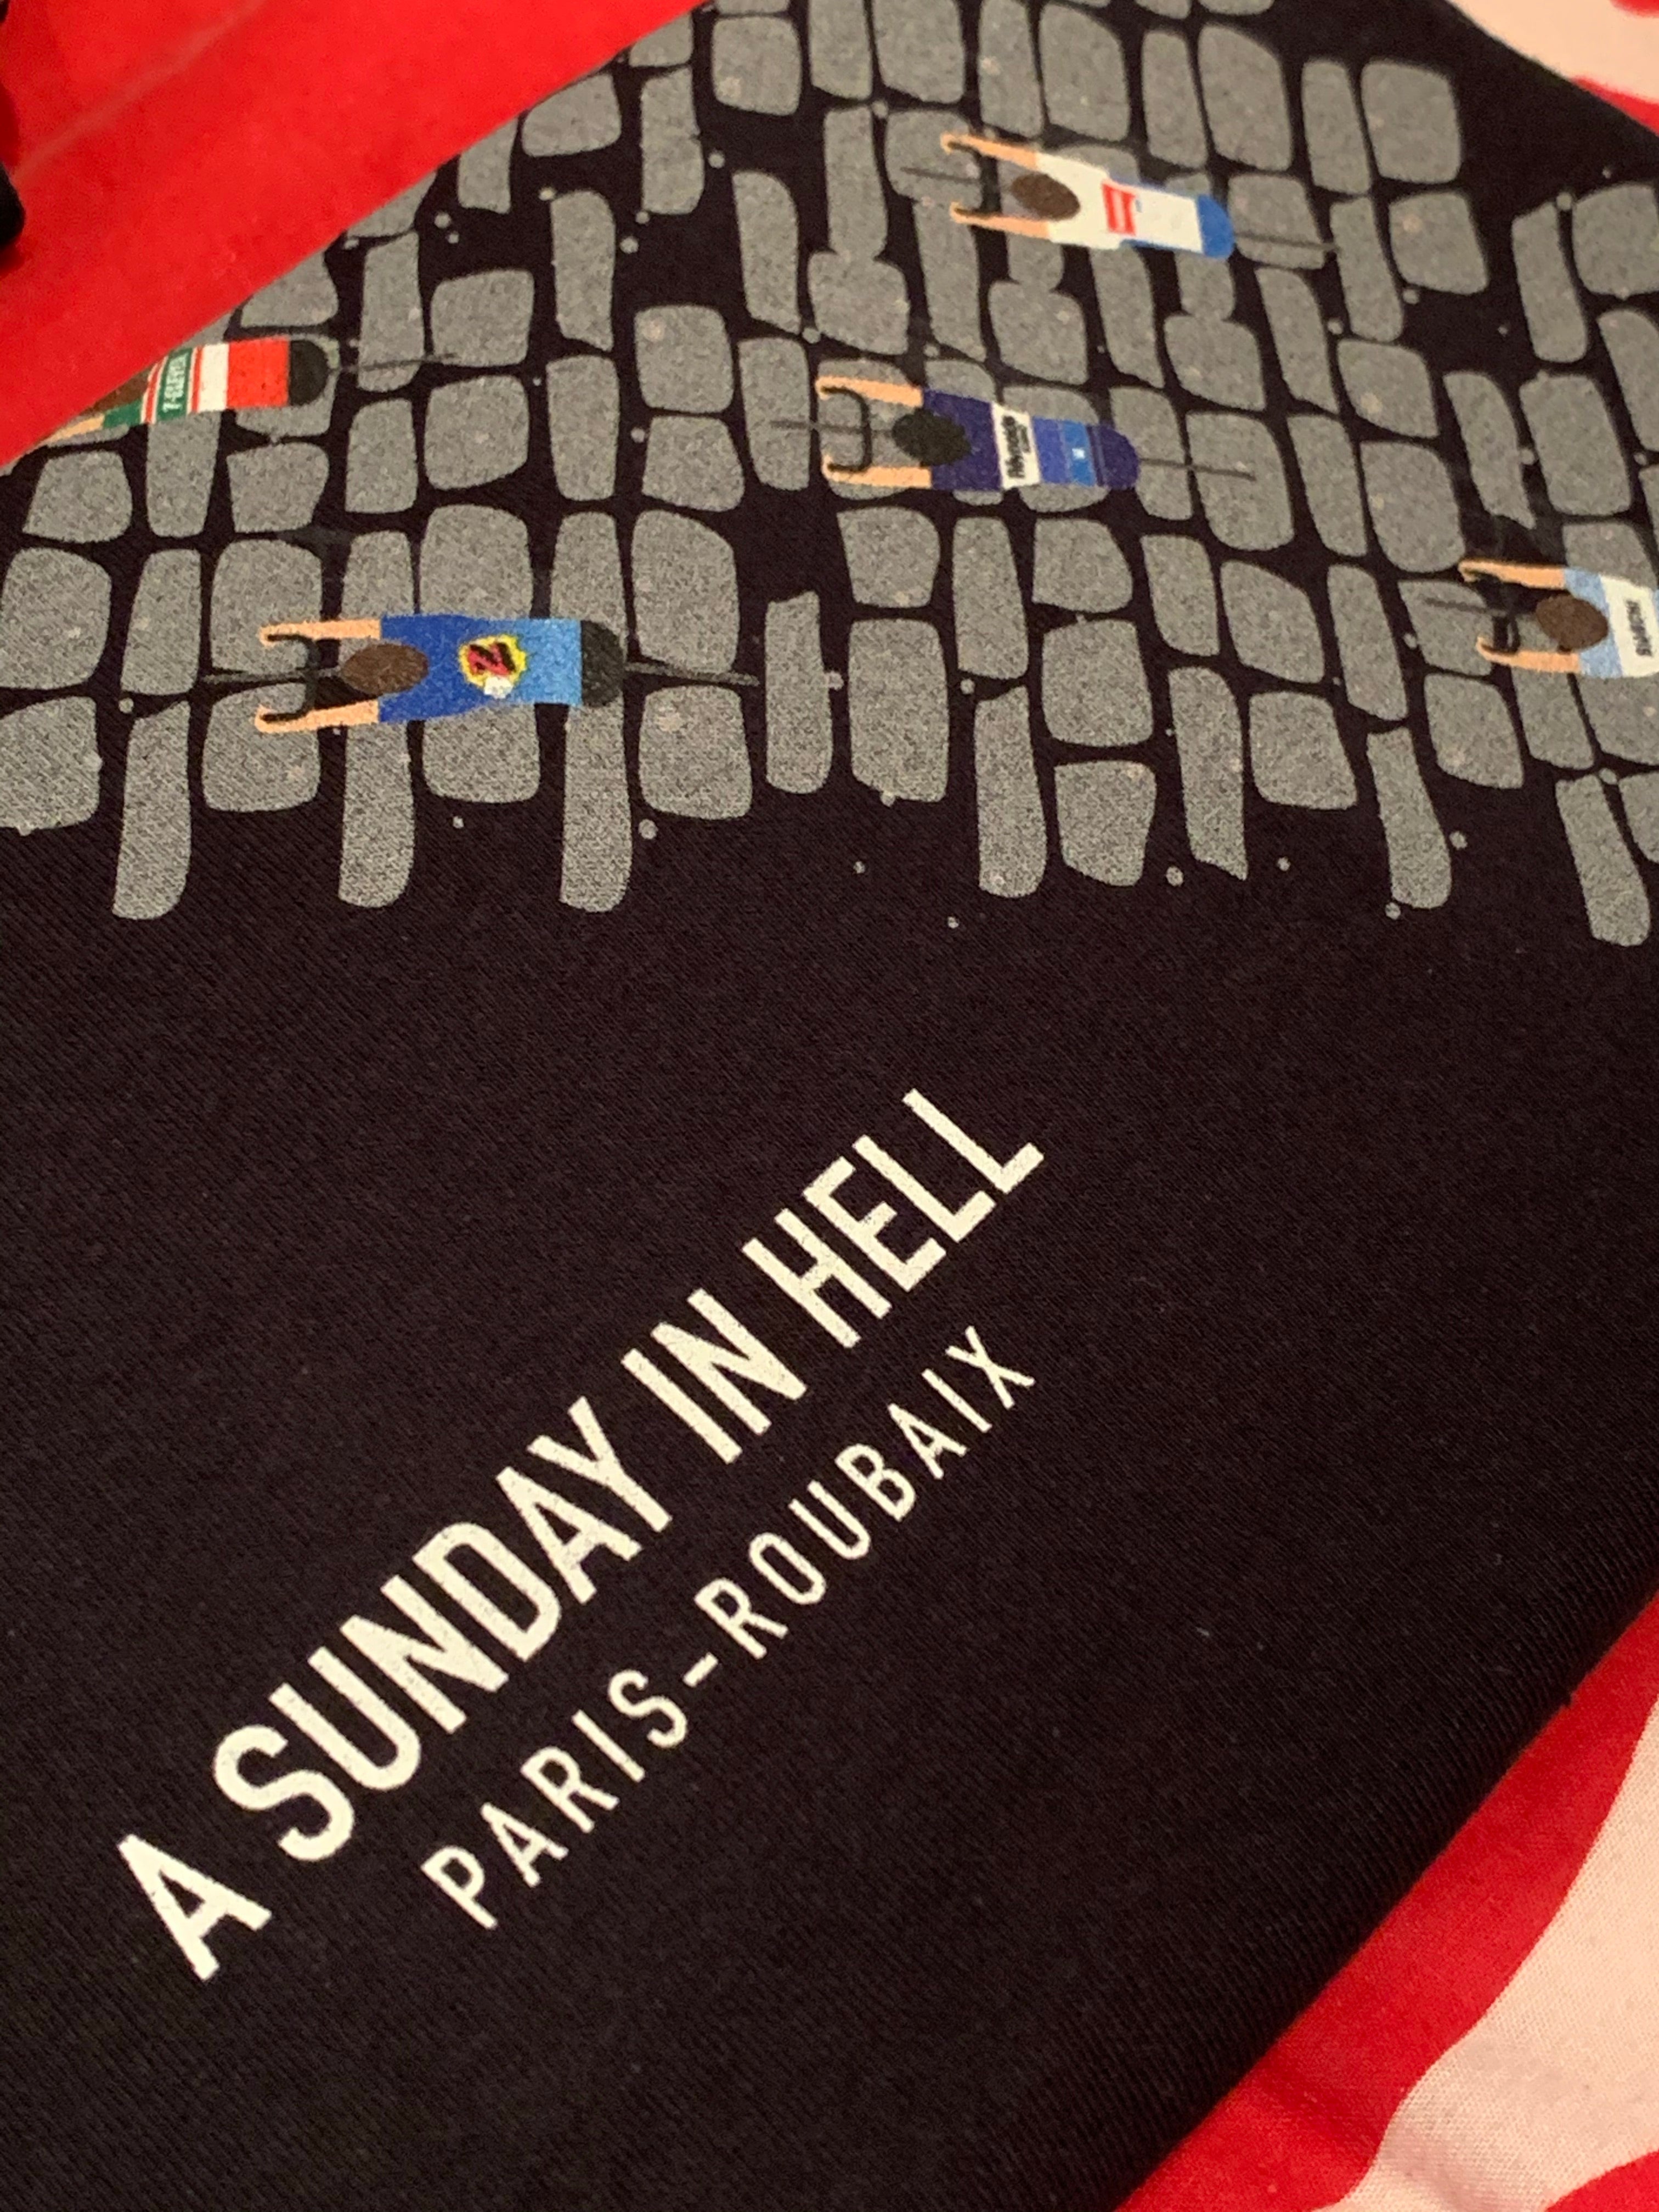 Paris-Roubaix 'Sunday in Hell' T-Shirt